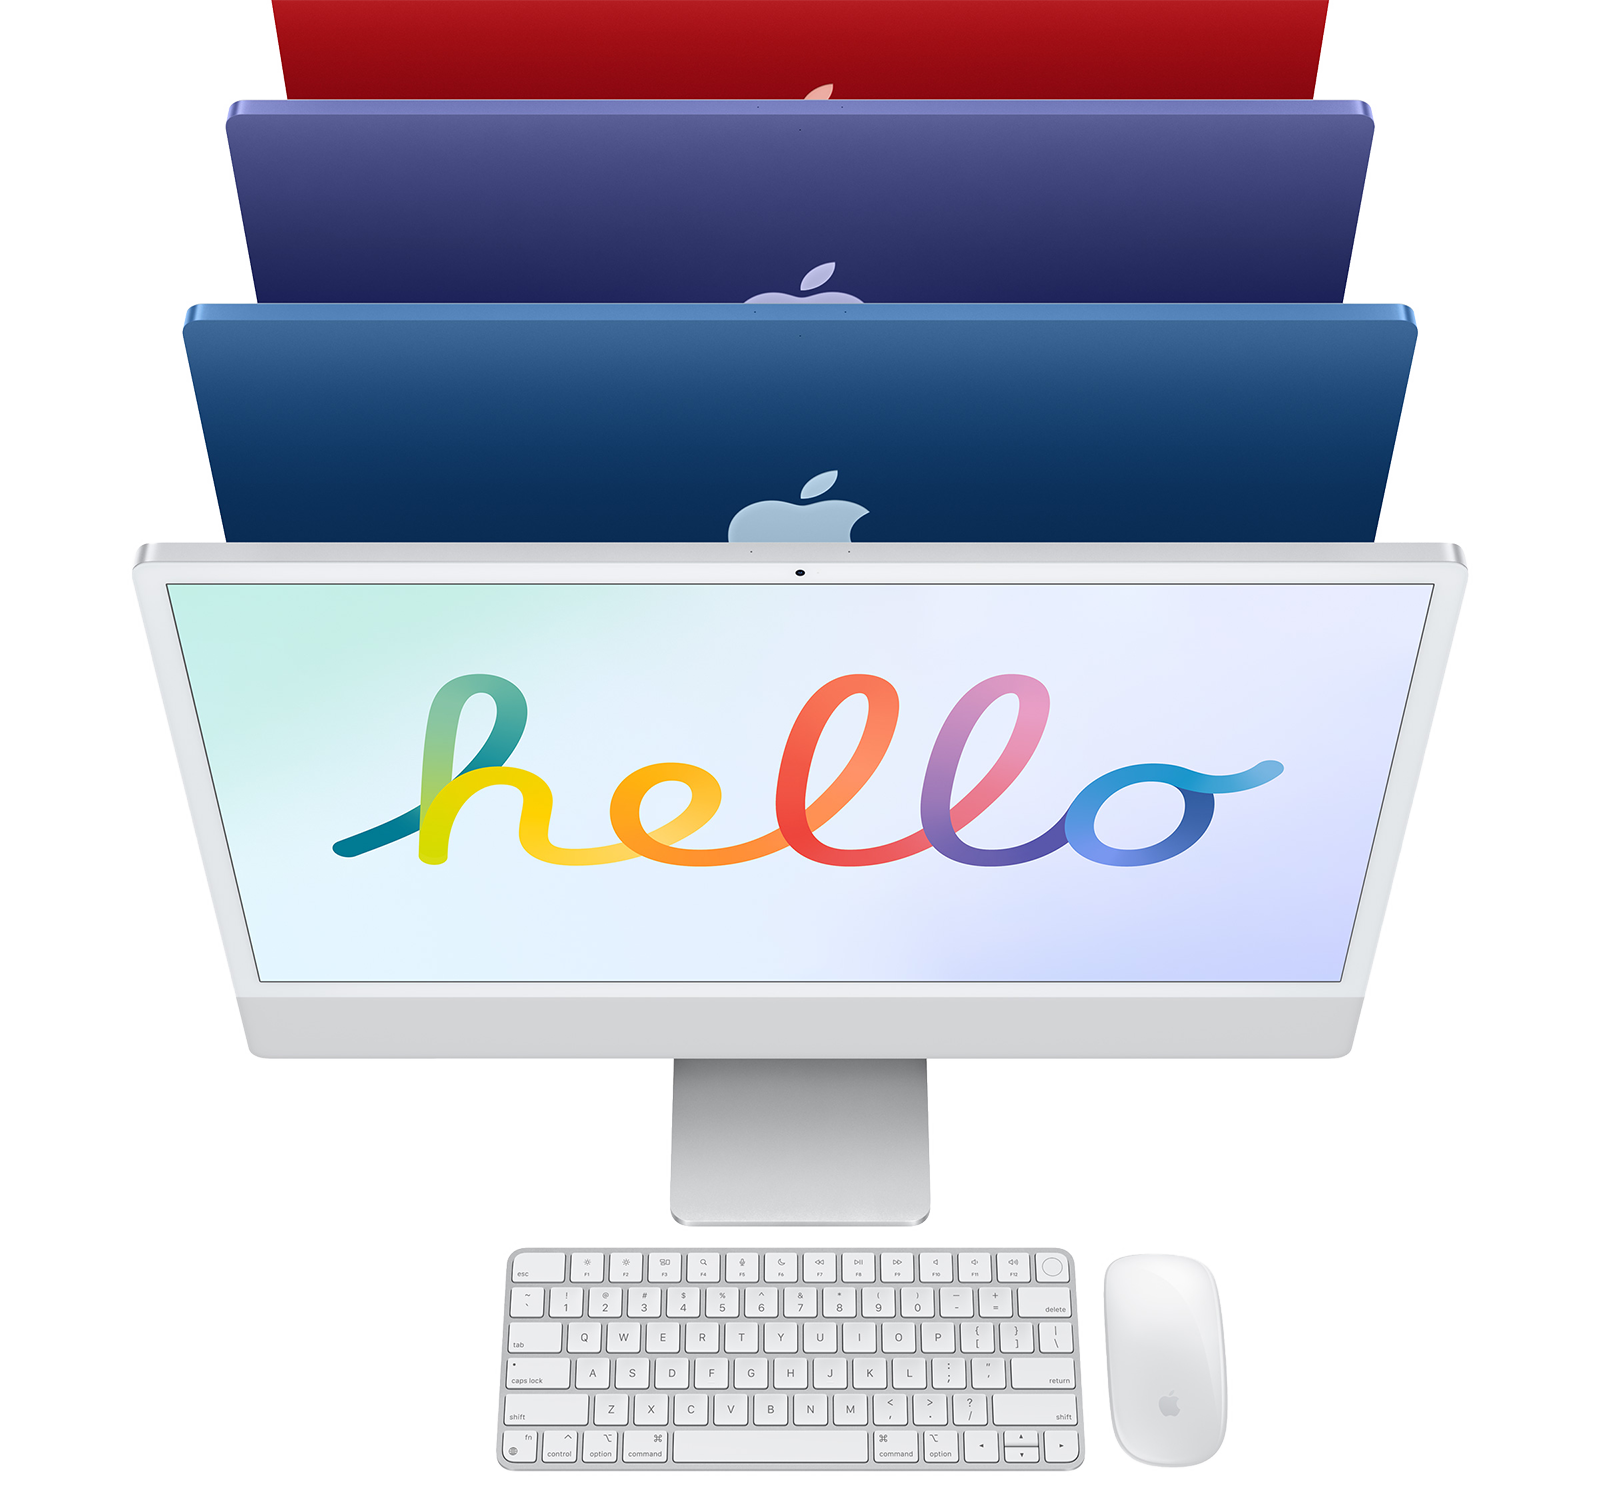 M1 iMac 24-inch with Hello wallpaper